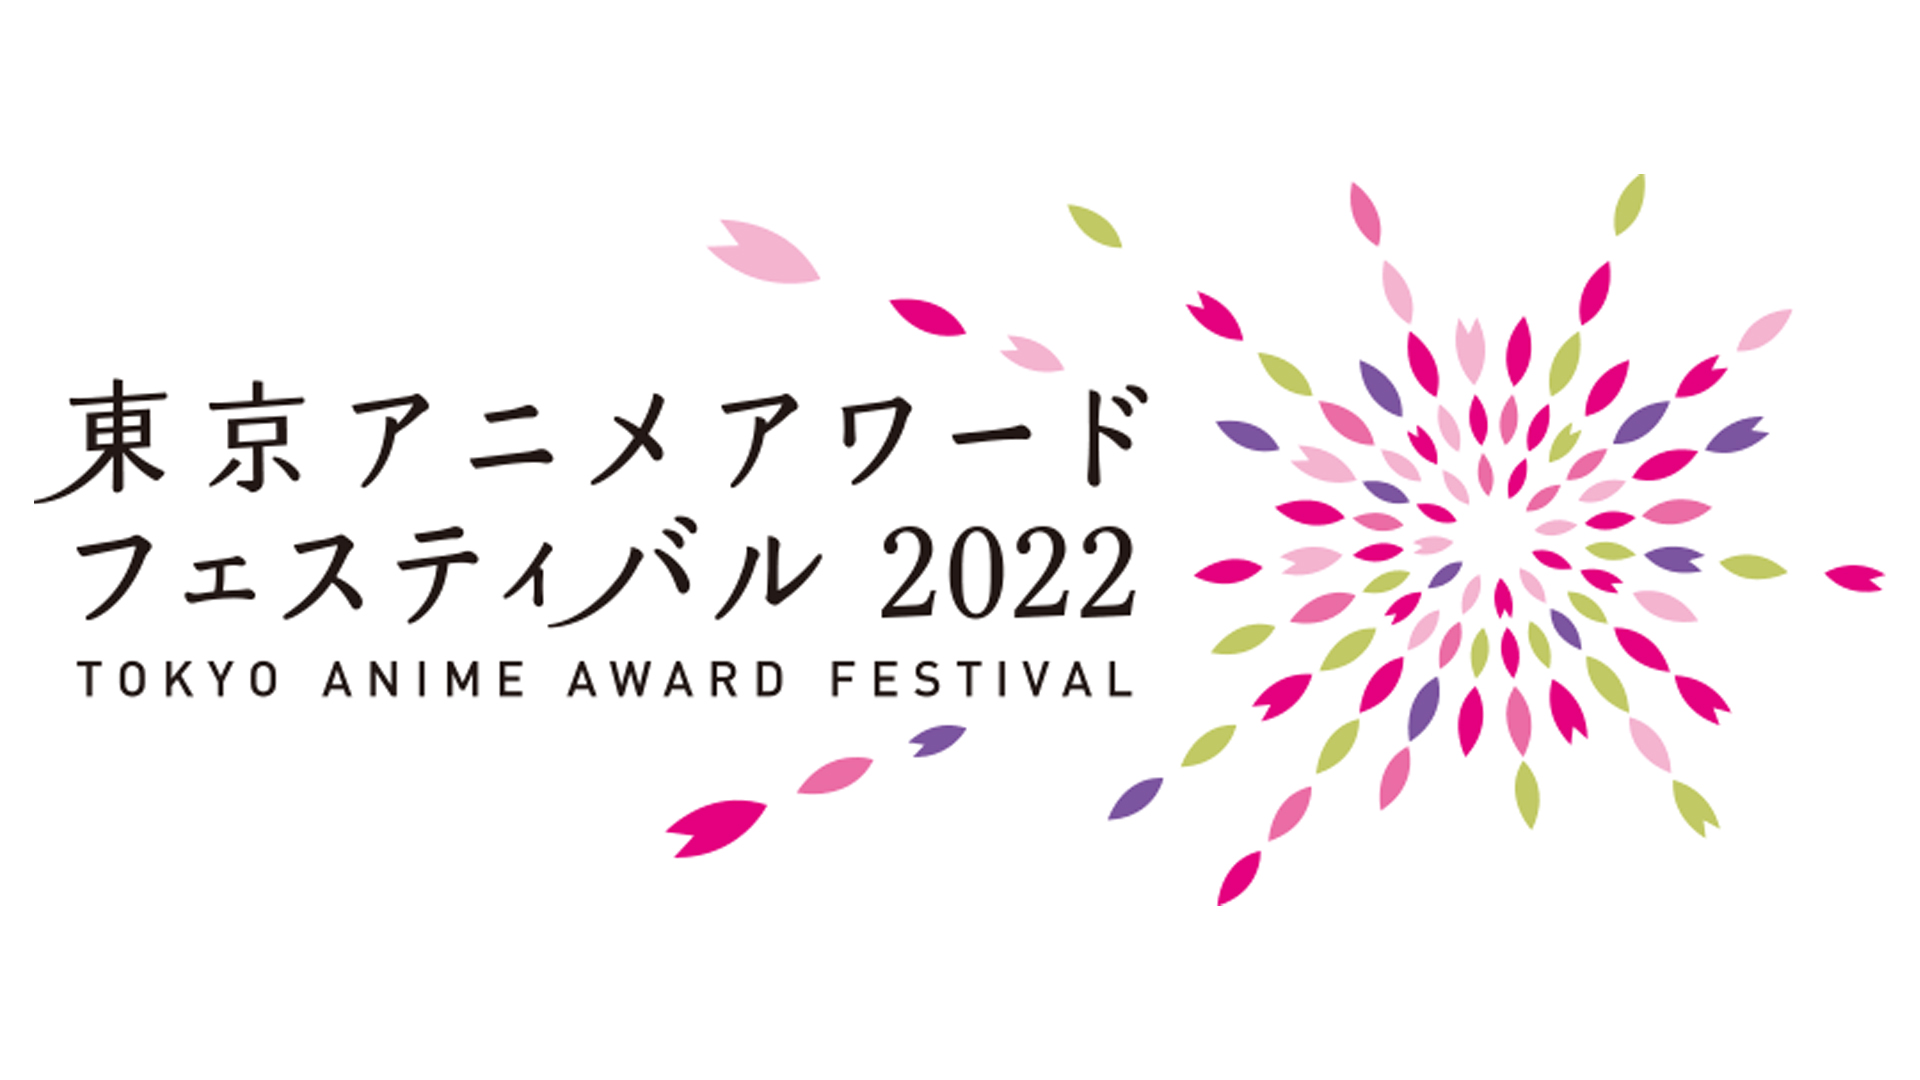 Tokyo Anime Award Festival 2022